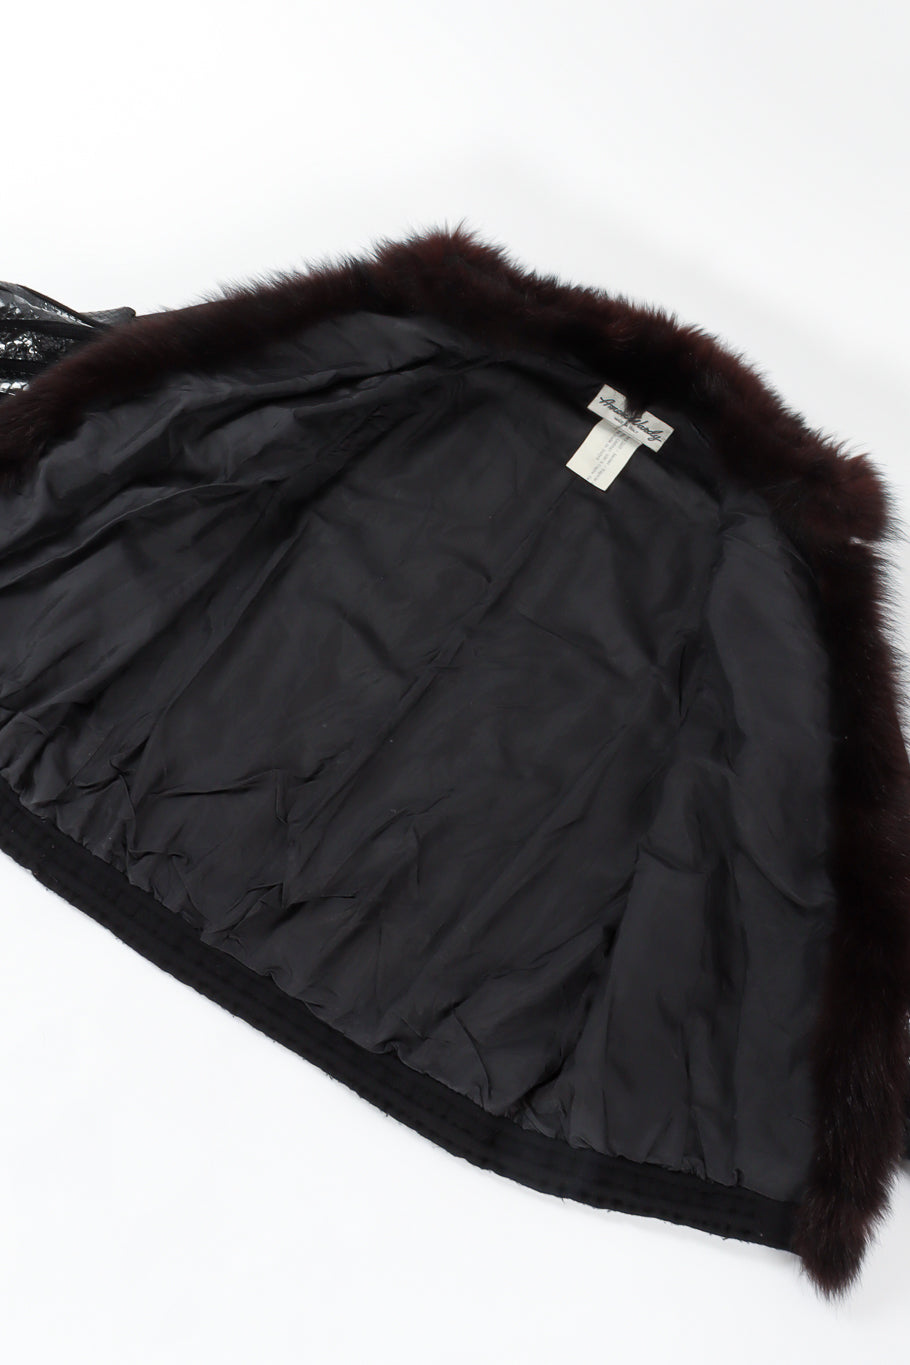 Vintage Amen Wardy Snake Leather Fur Jacket lining @ Recess LA